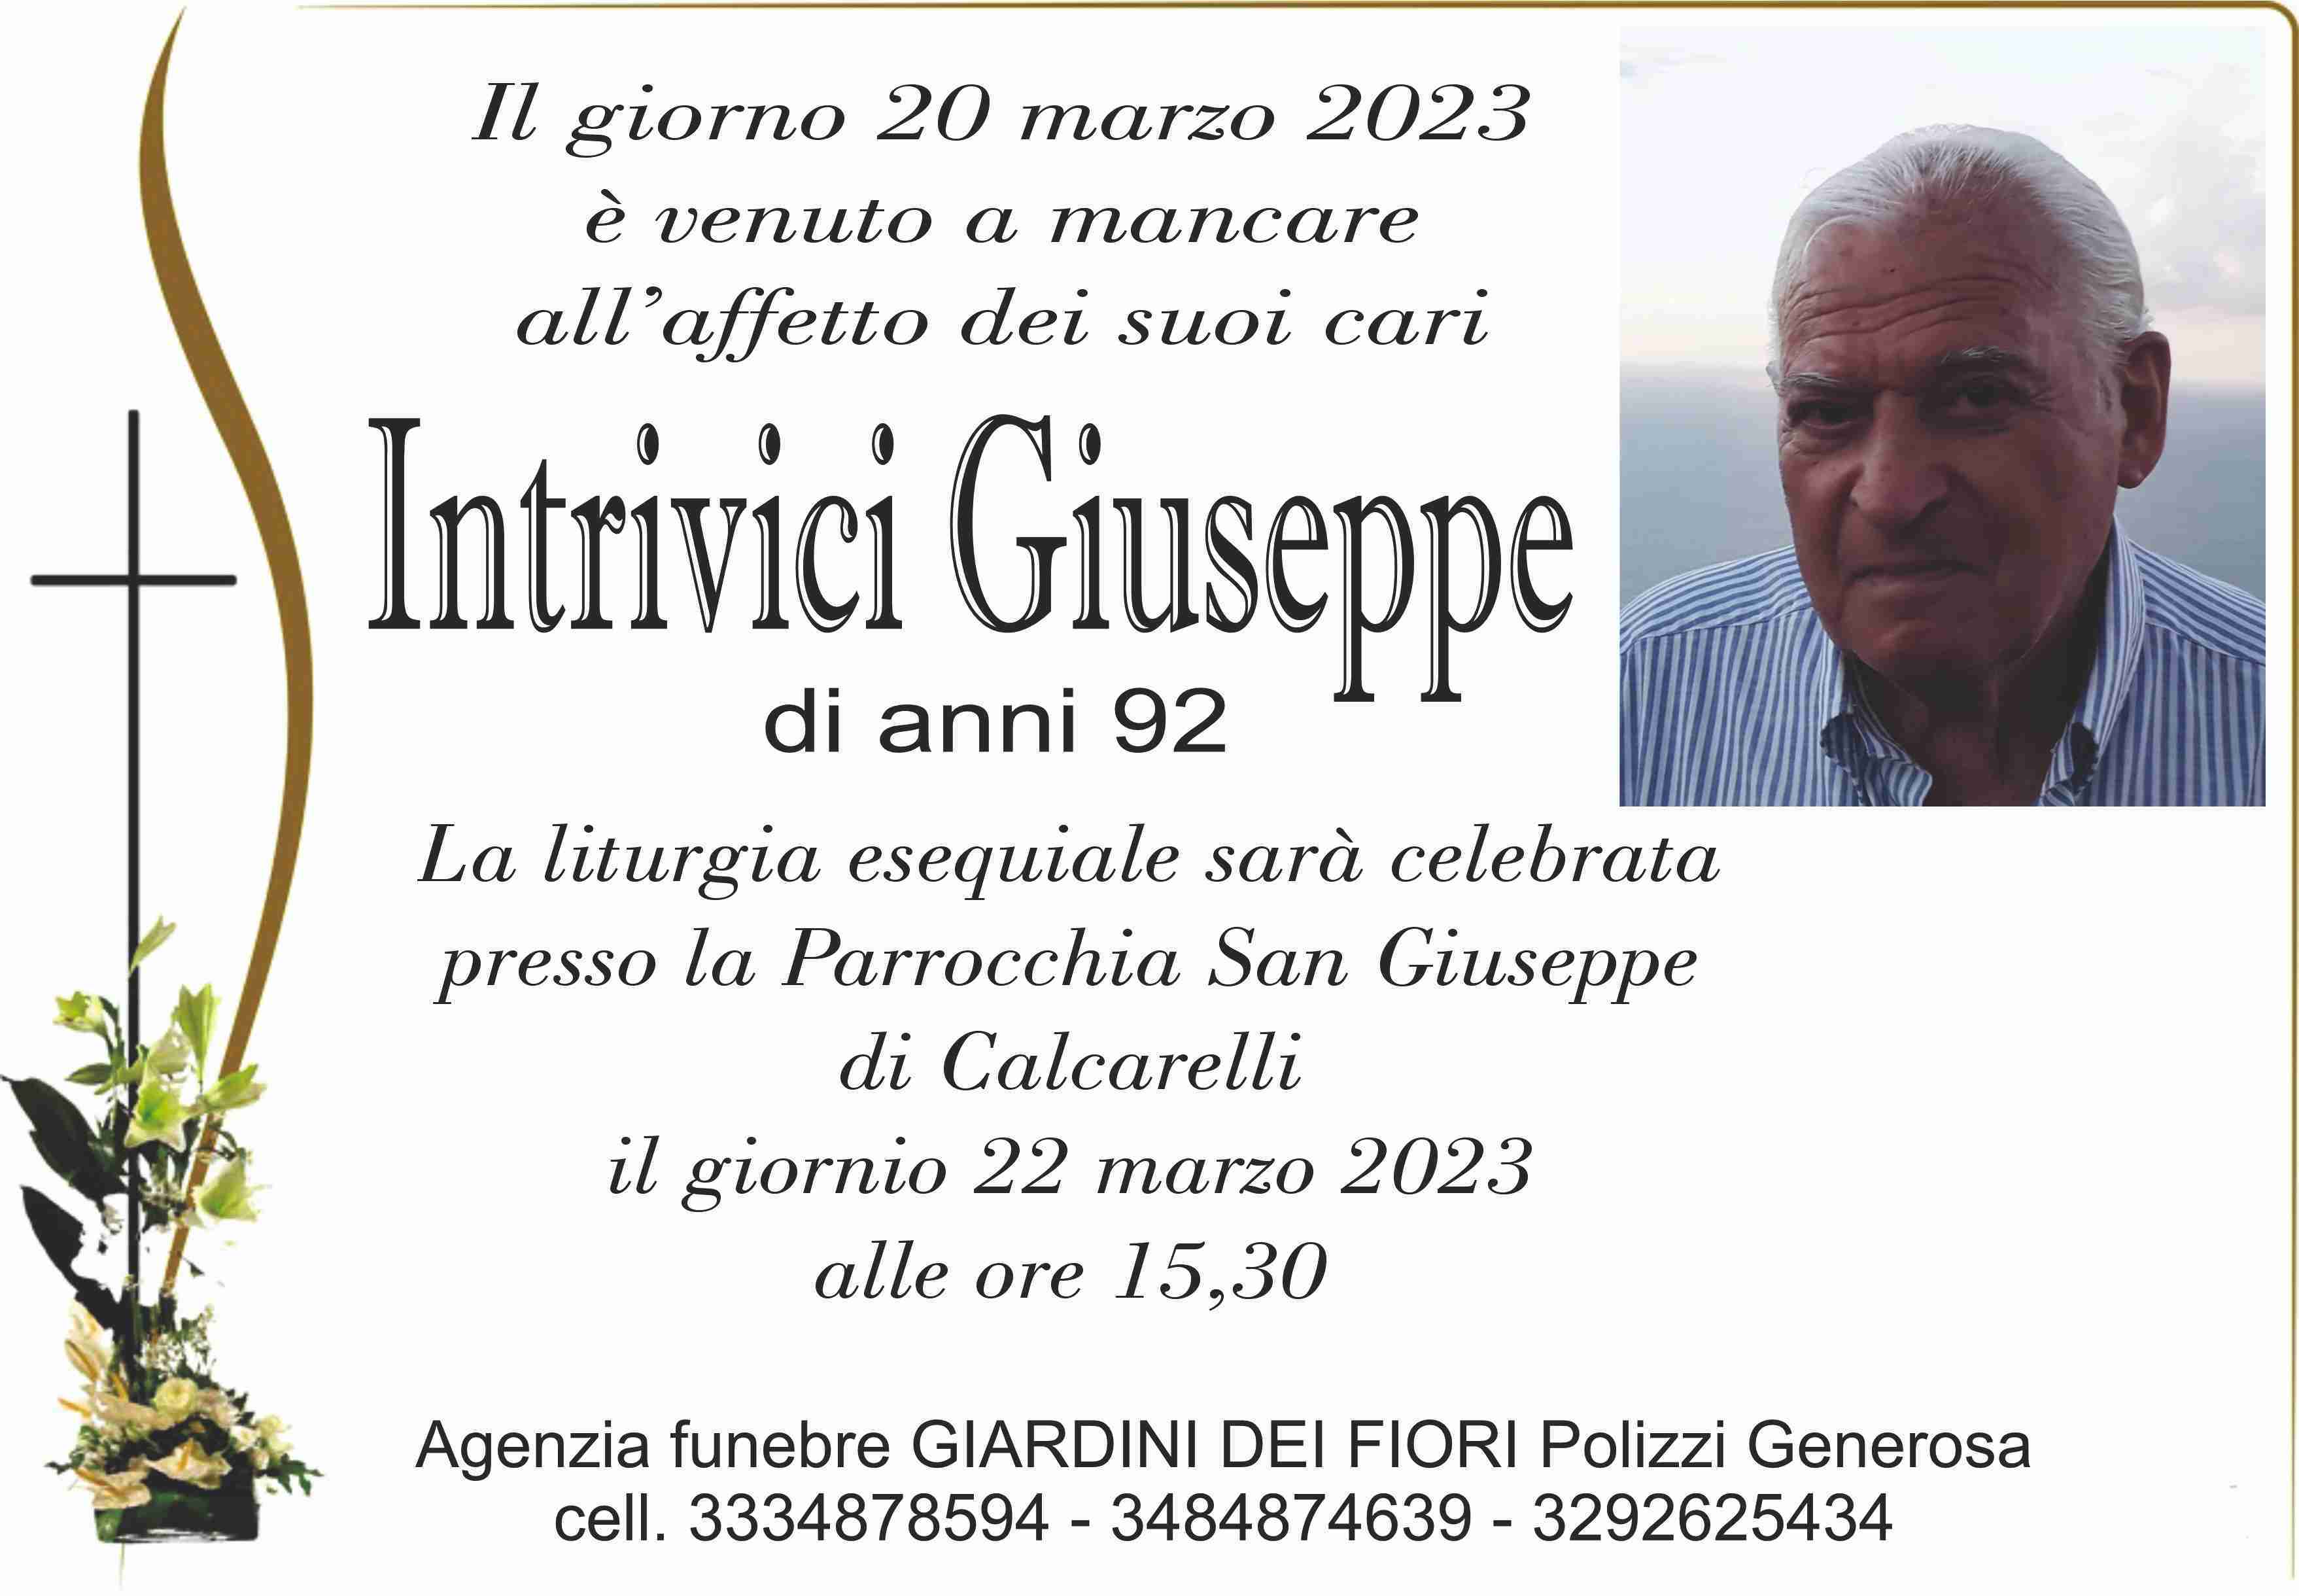 Giuseppe Intrivici